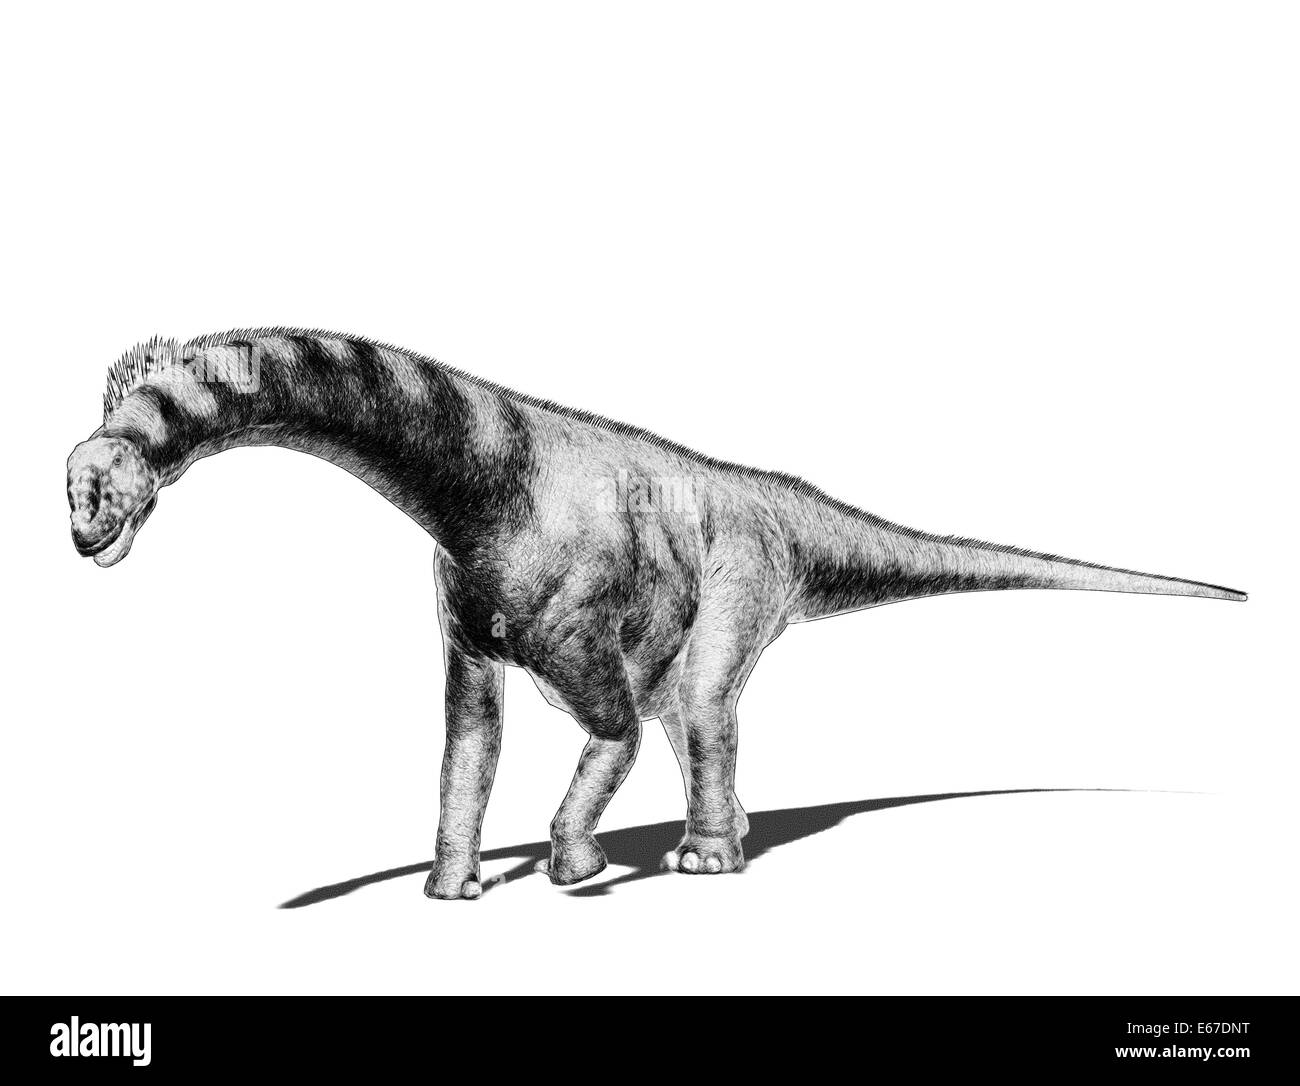 Dinosaurier Camarasaurus / dinosaur Camarasaurus Stock Photo